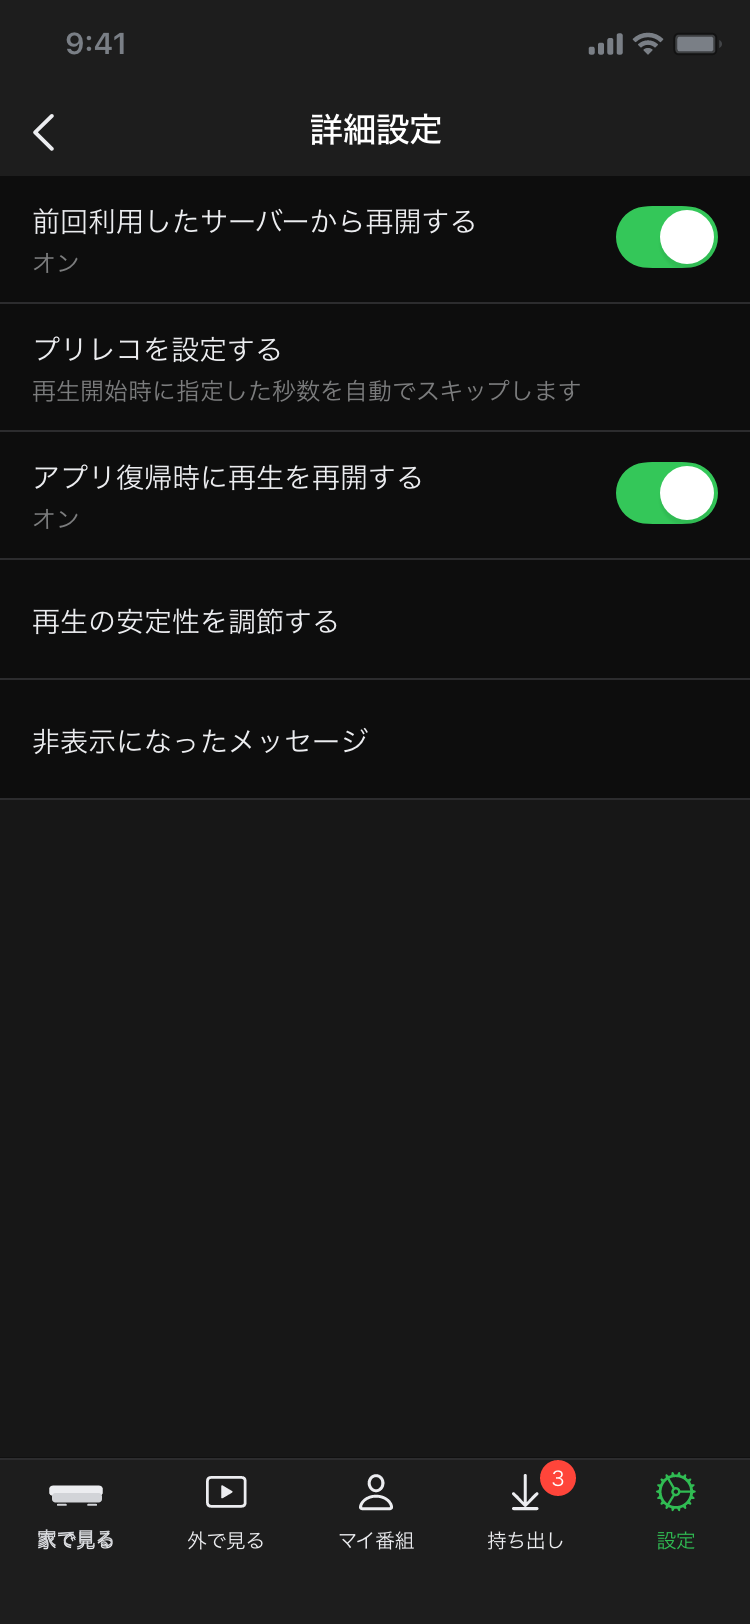 DiXiM Digital TV for iOS 詳細設定